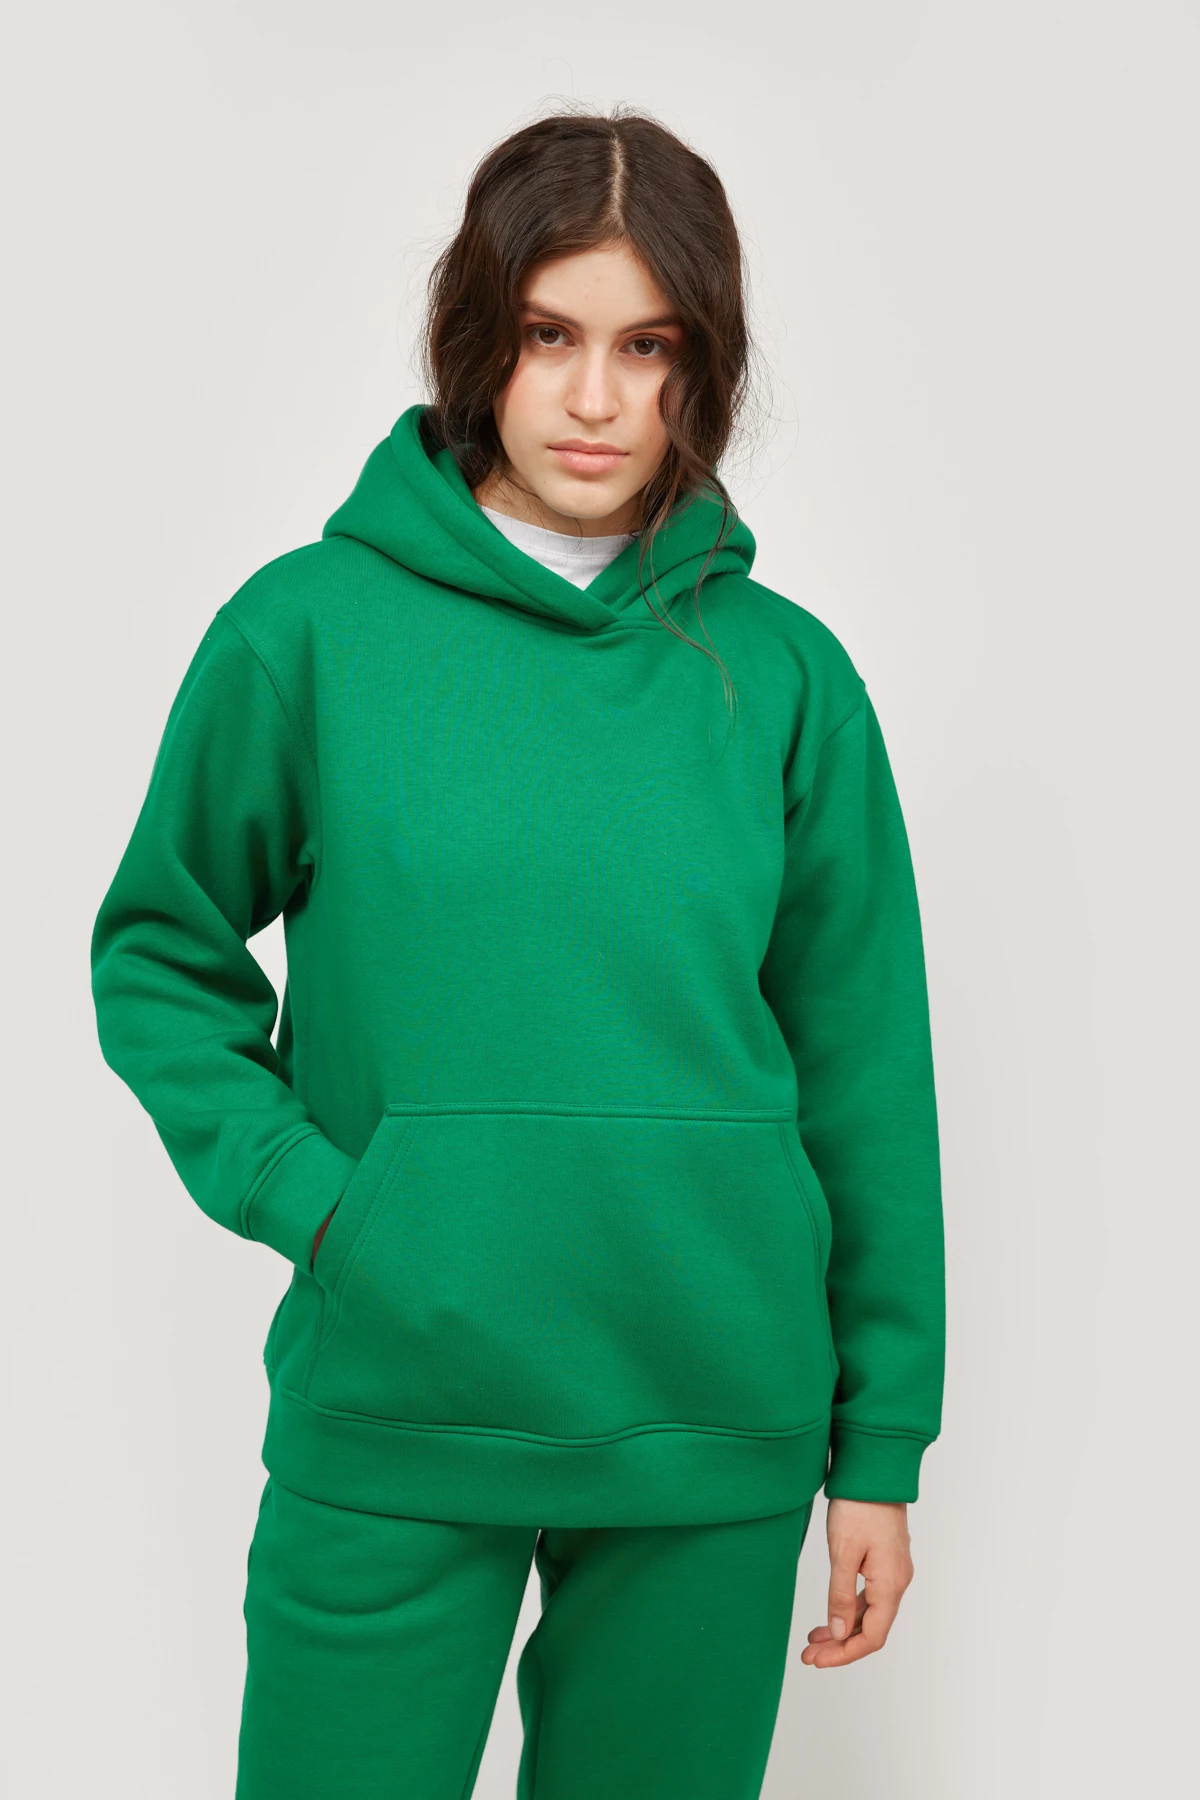 Oversized green hoodie, photo 1